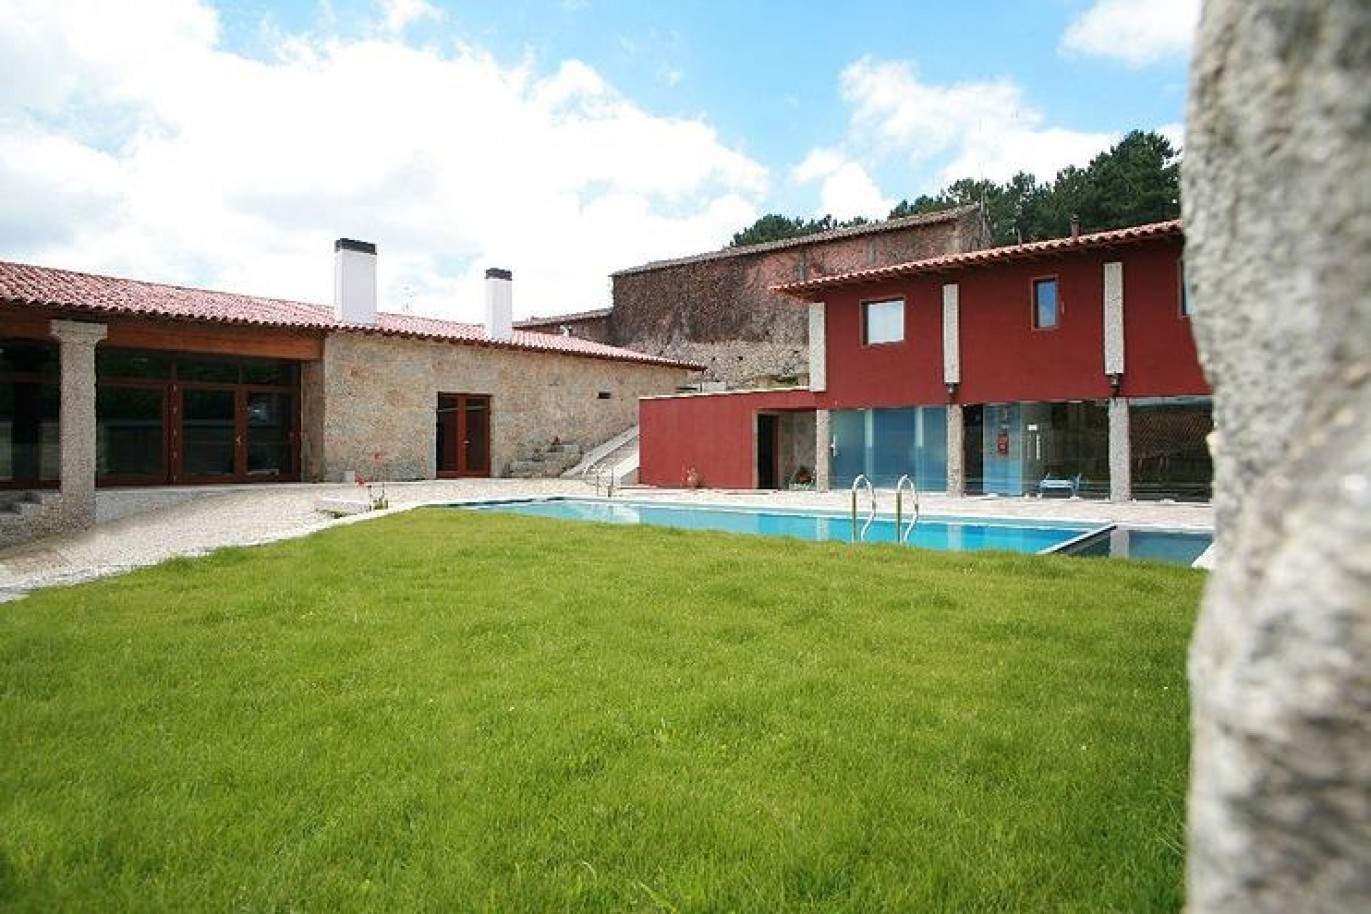 Hôtel Rural avec piscine et jardin, Braga, Portugal_35968